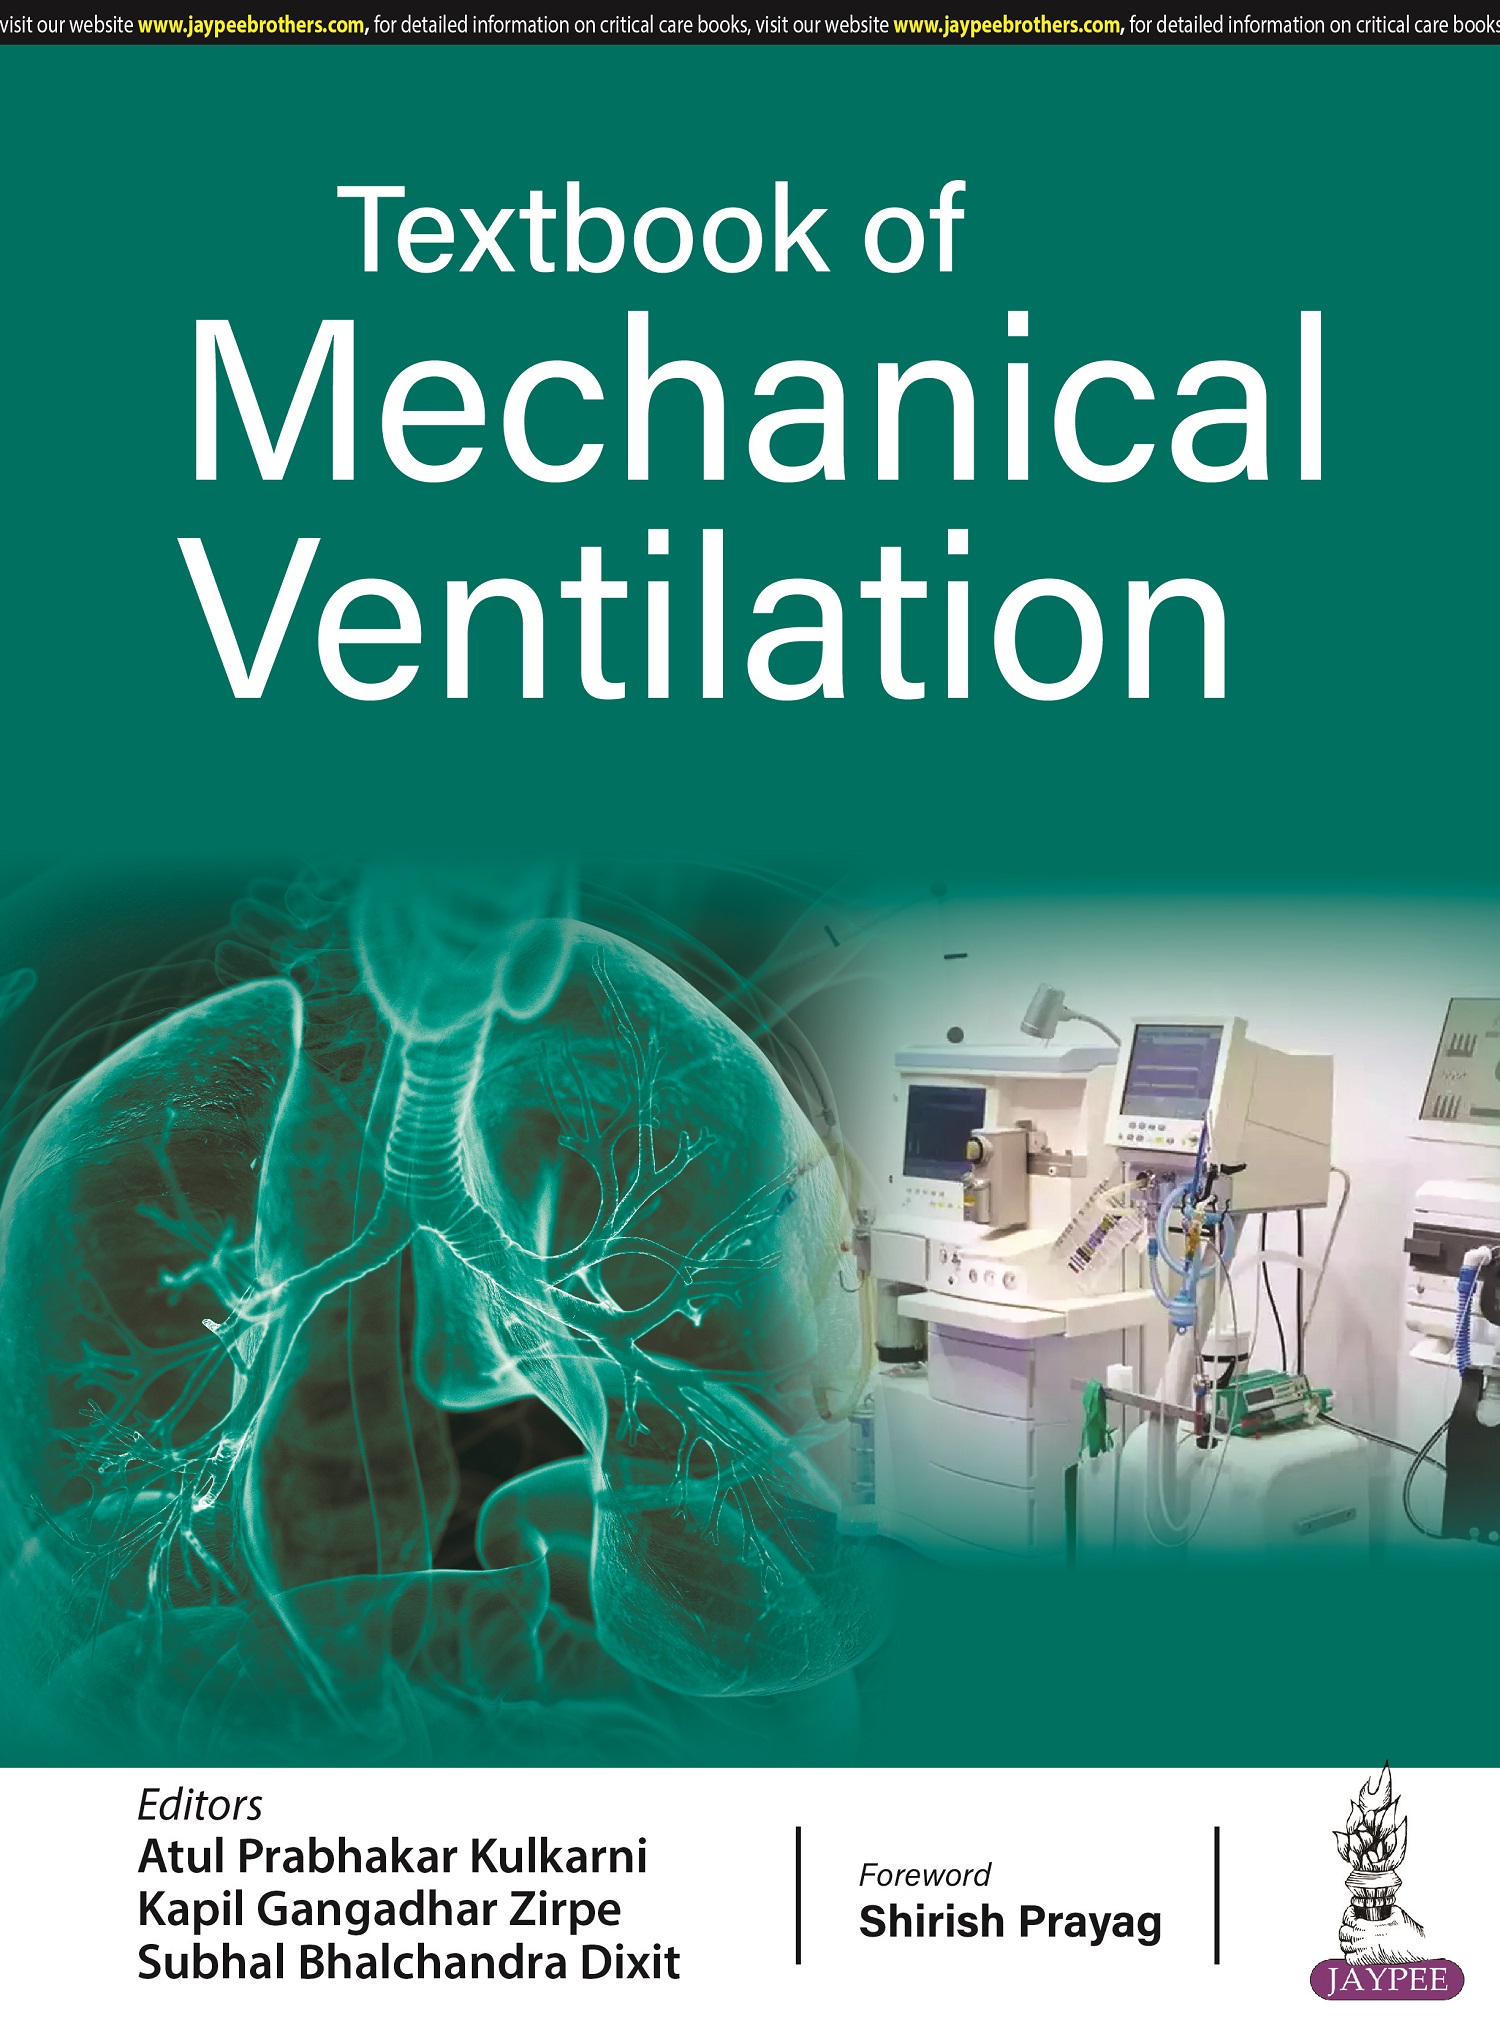 Textbook of Mechanical Ventilation